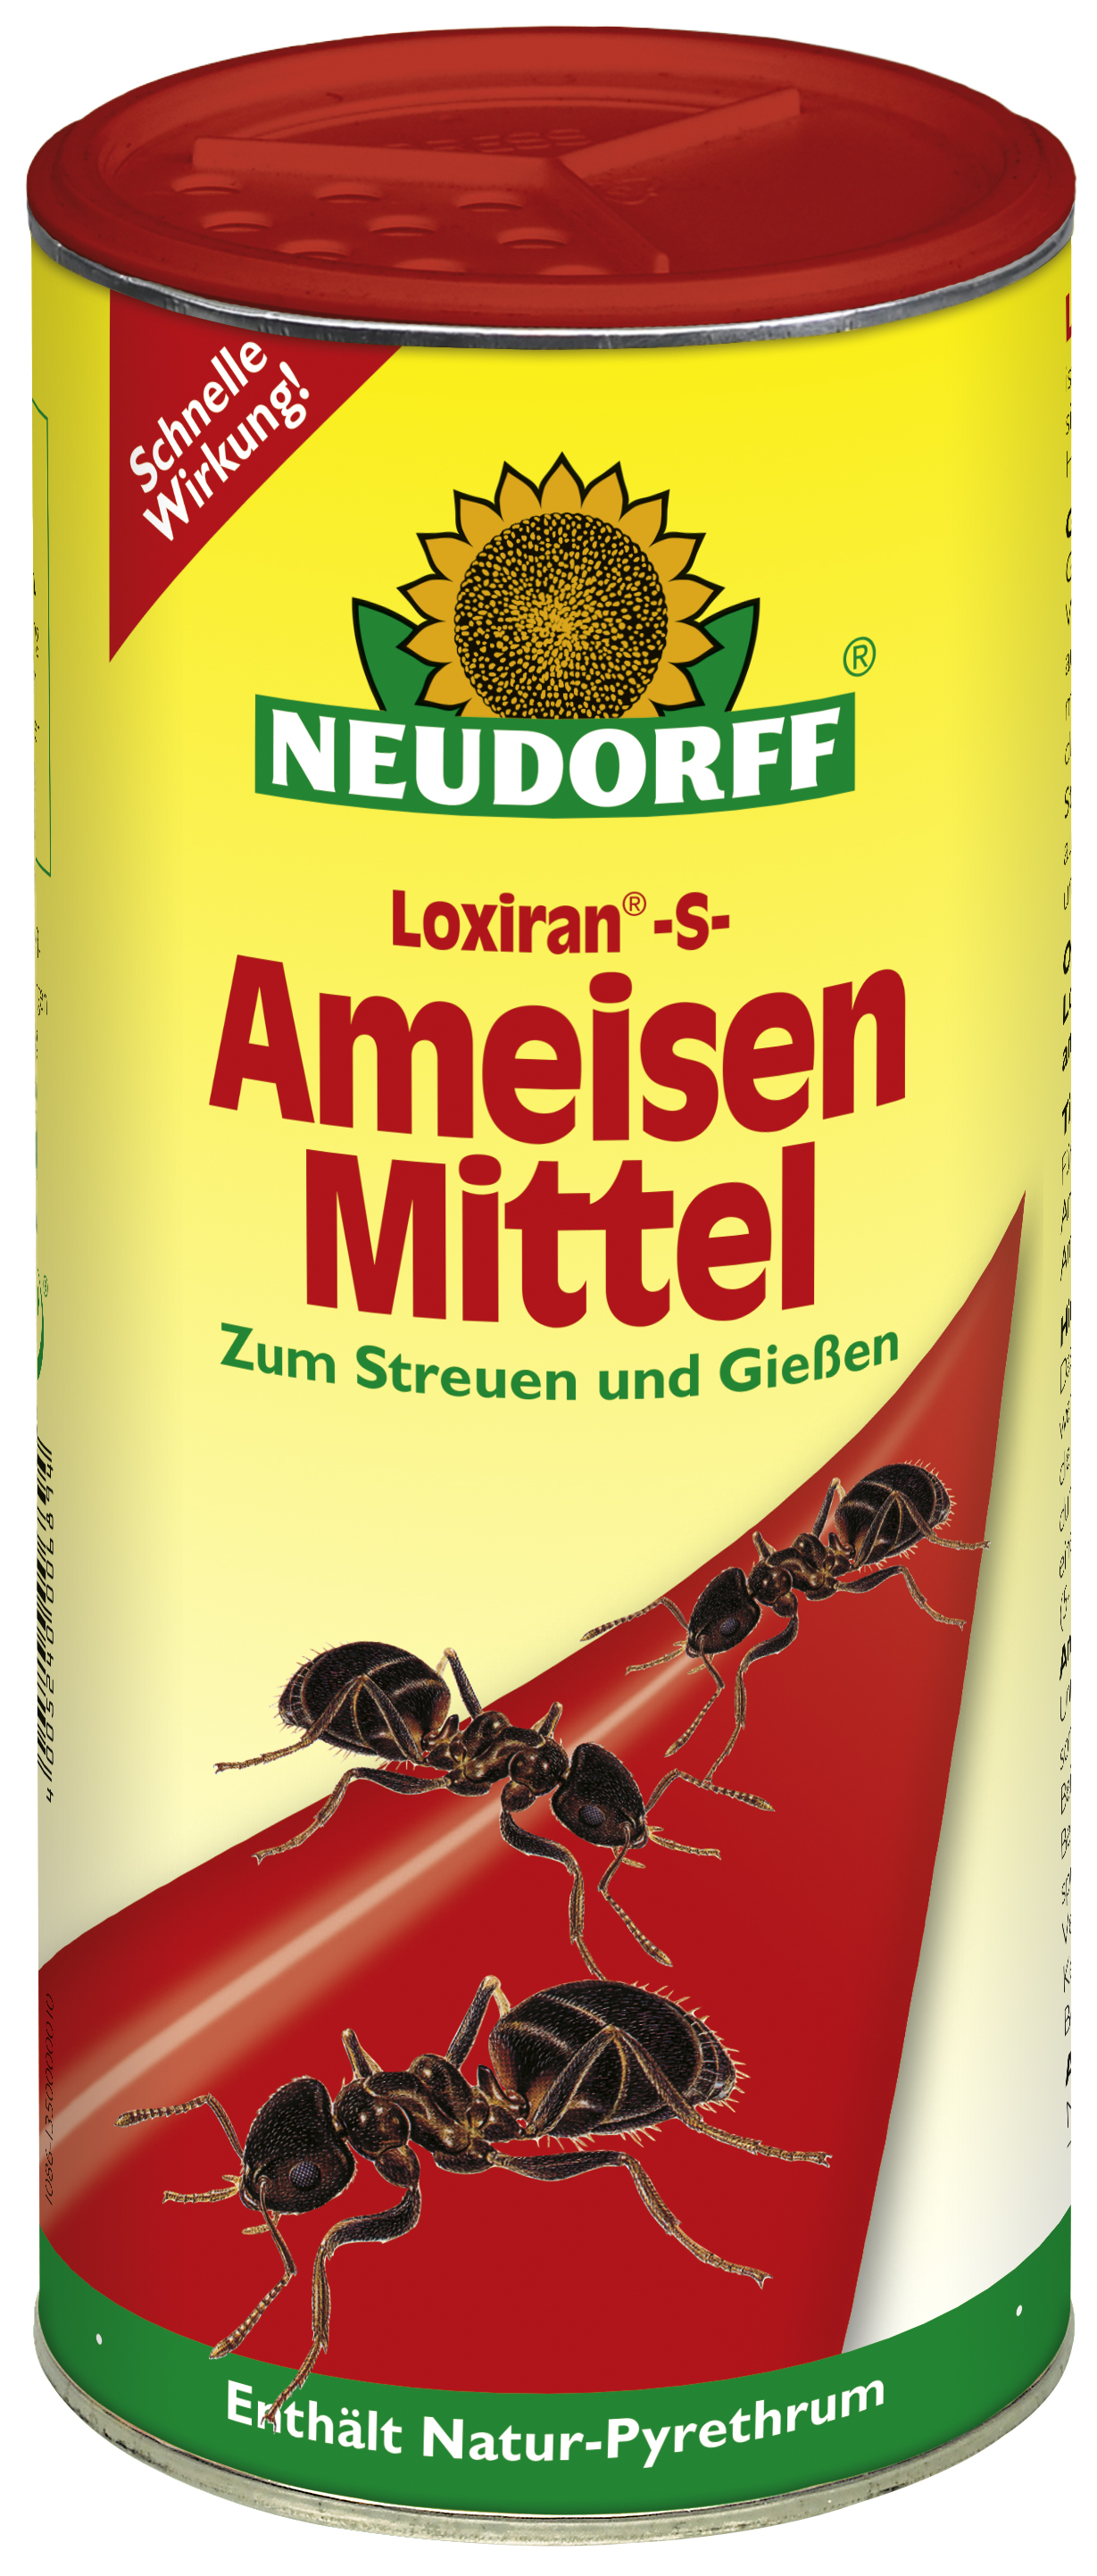 Neudorff Loxiran® -S- AmeisenMittel 500 g